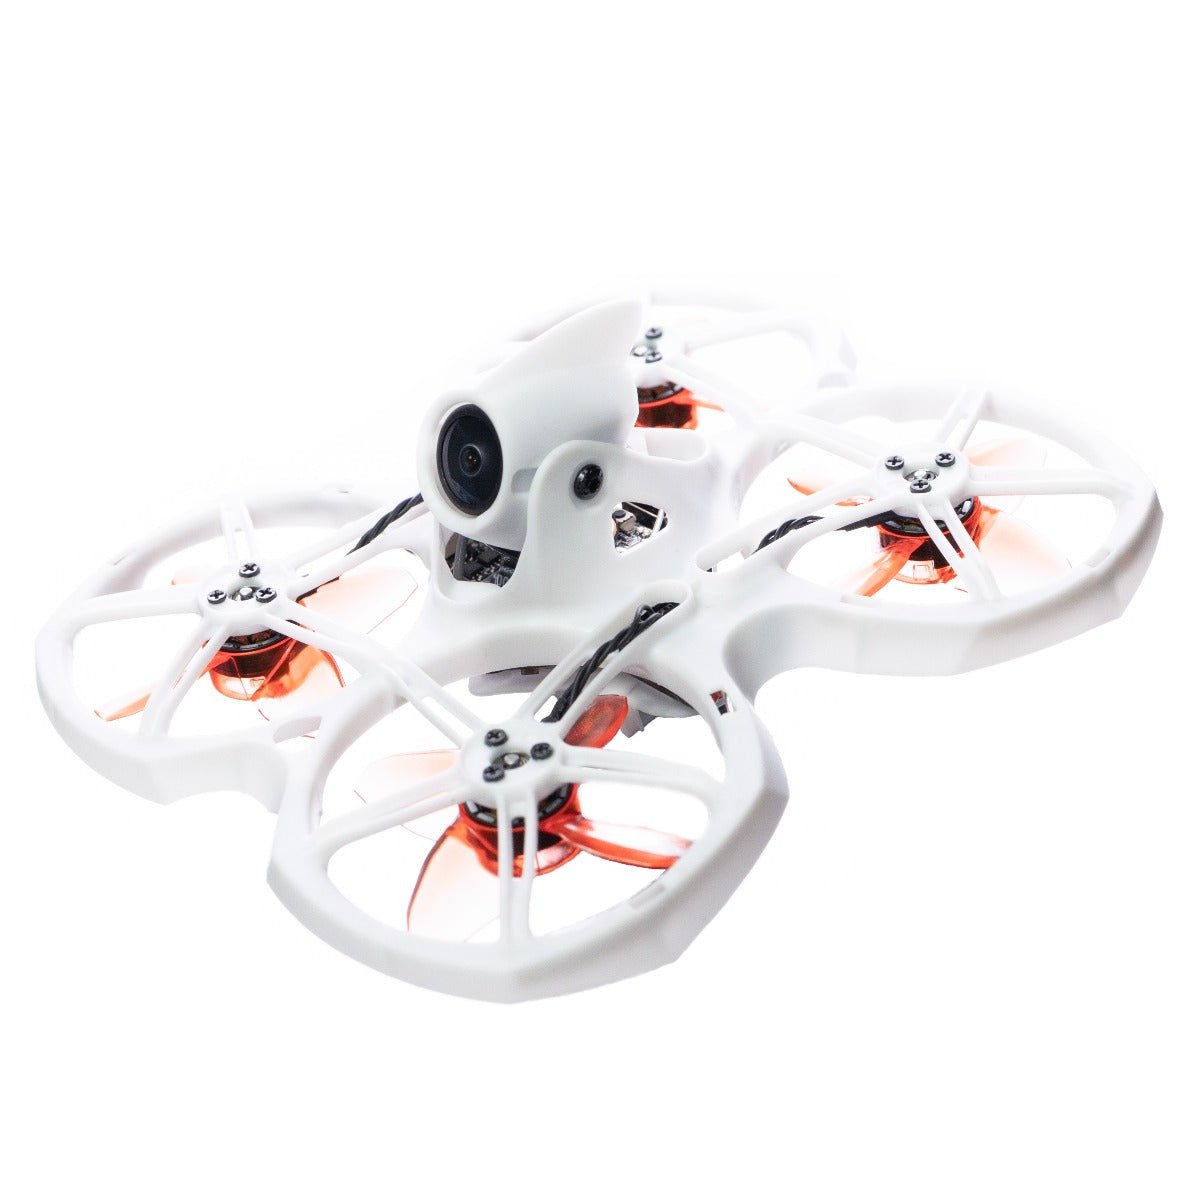 Tinyhawk II RTF FPV Micro/Whoop Drone Kit w/ Controller and Goggles